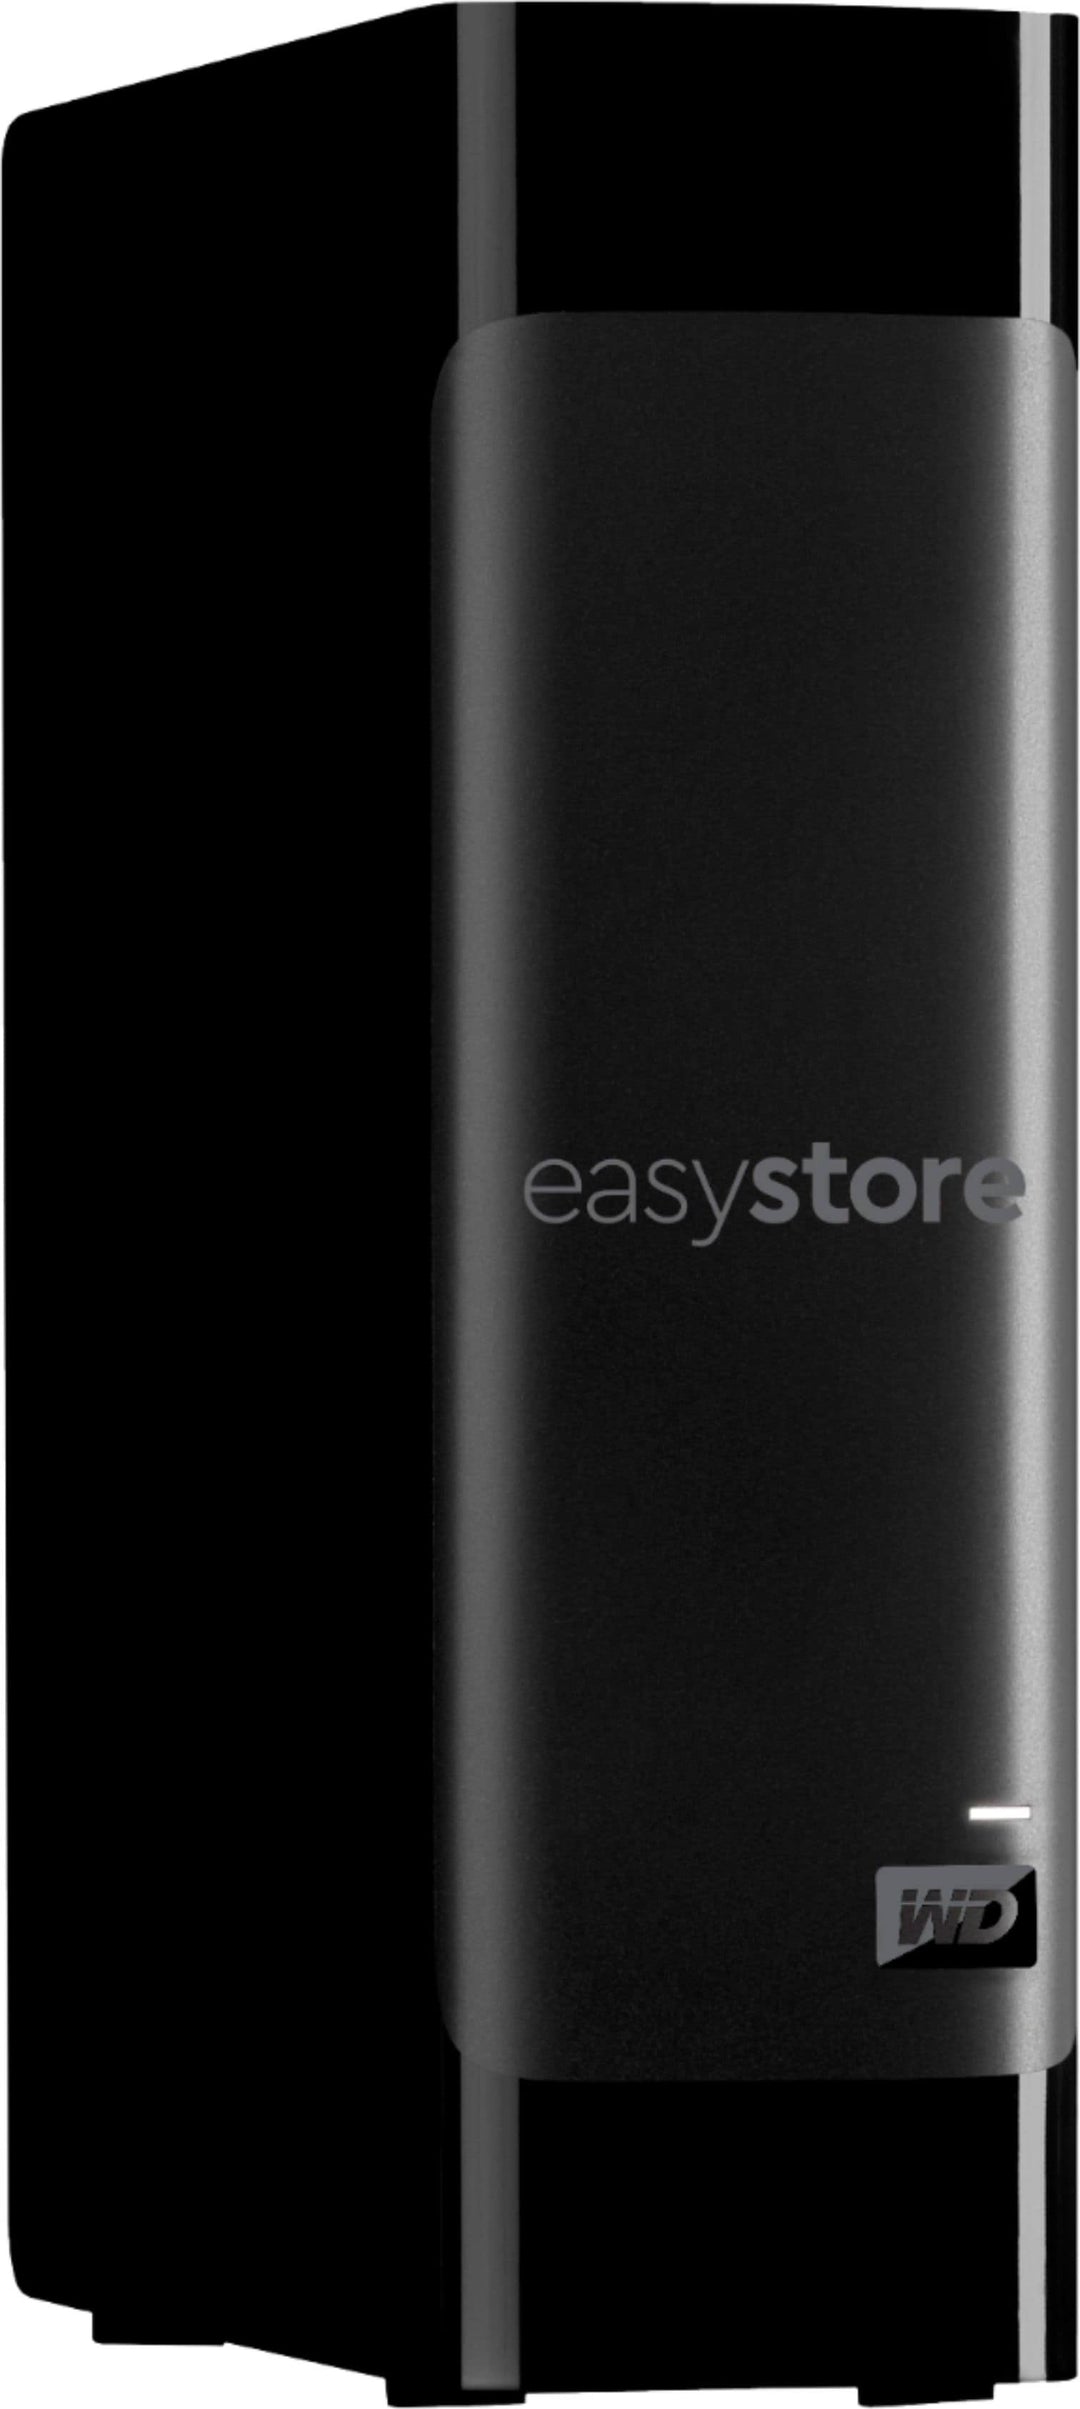 WD - easystore 8TB External USB 3.0 Hard Drive - Black_3